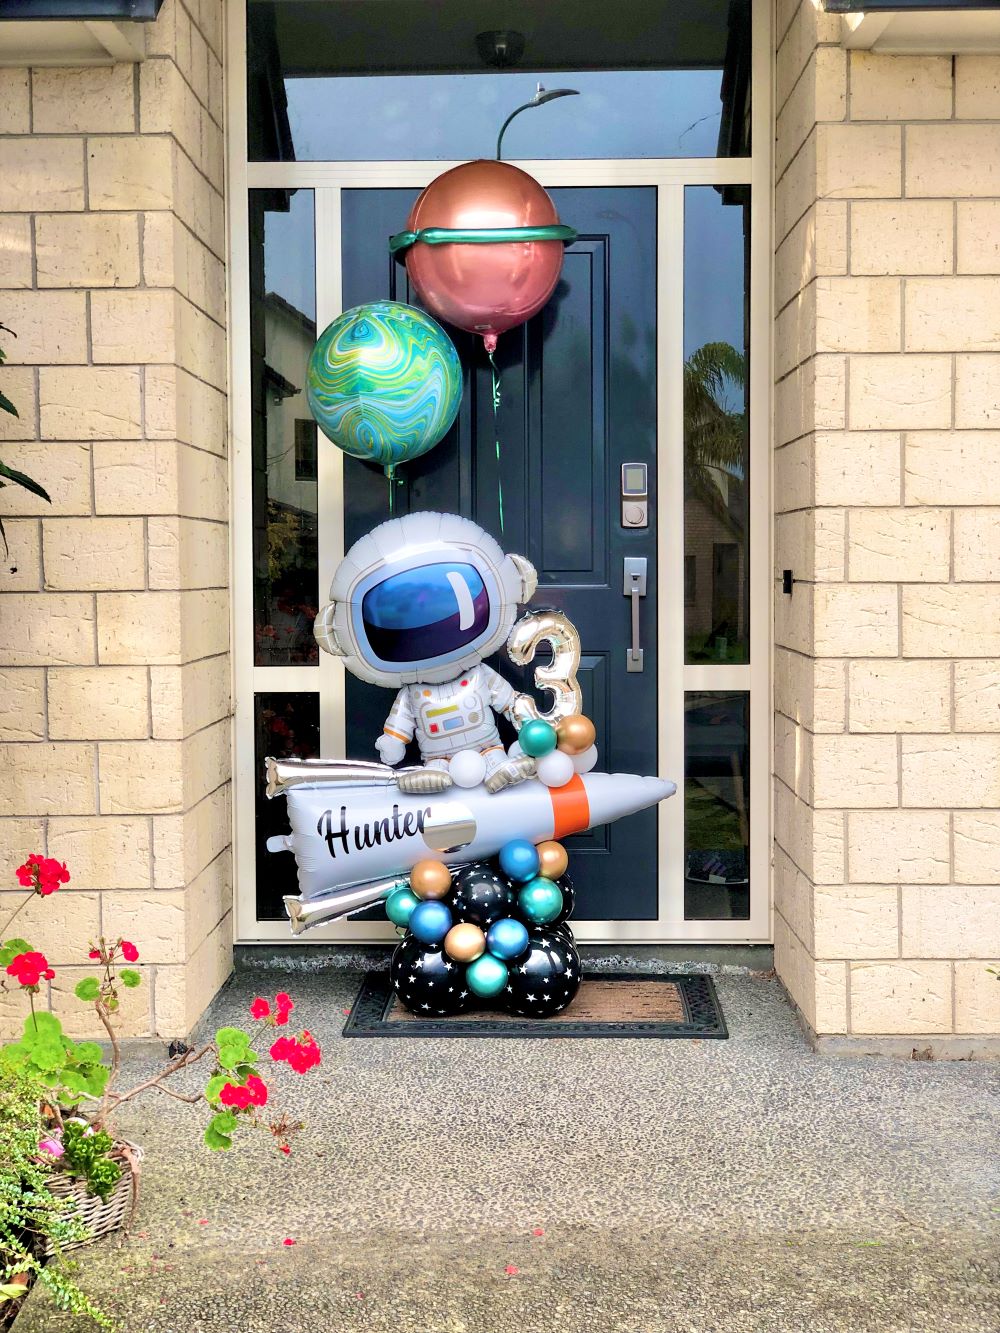 Astronaut Balloon Bouquet design with Astronaut Balloon, Air plane balloon, and orange and green Orbz balloons outside a house door